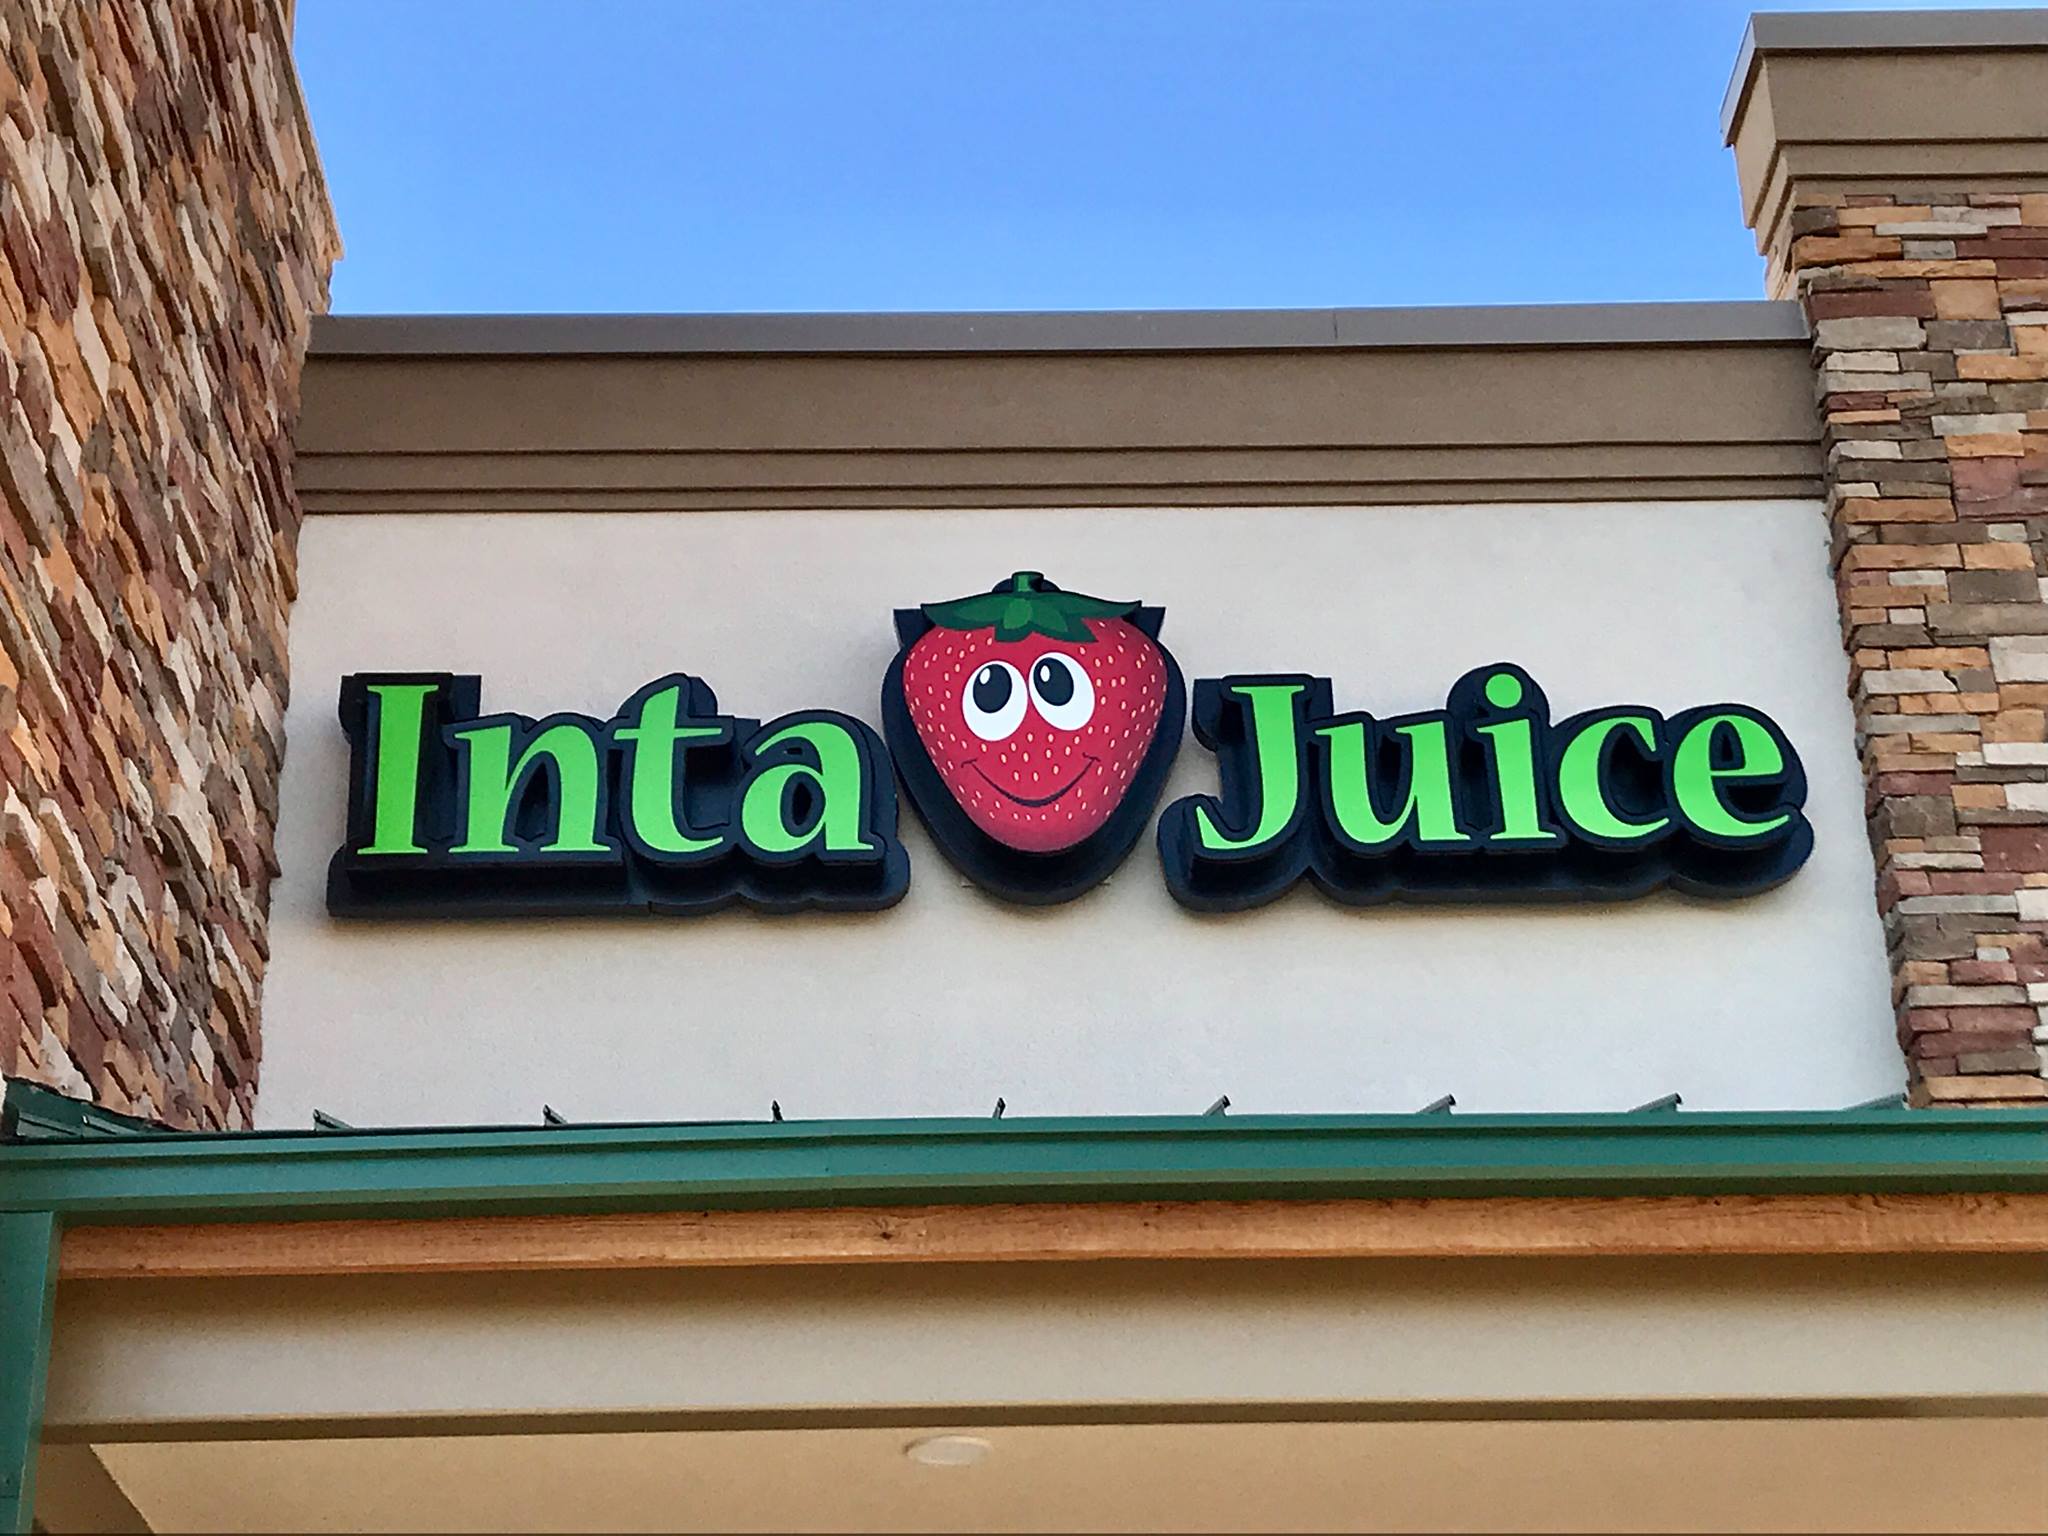 Inta Juice